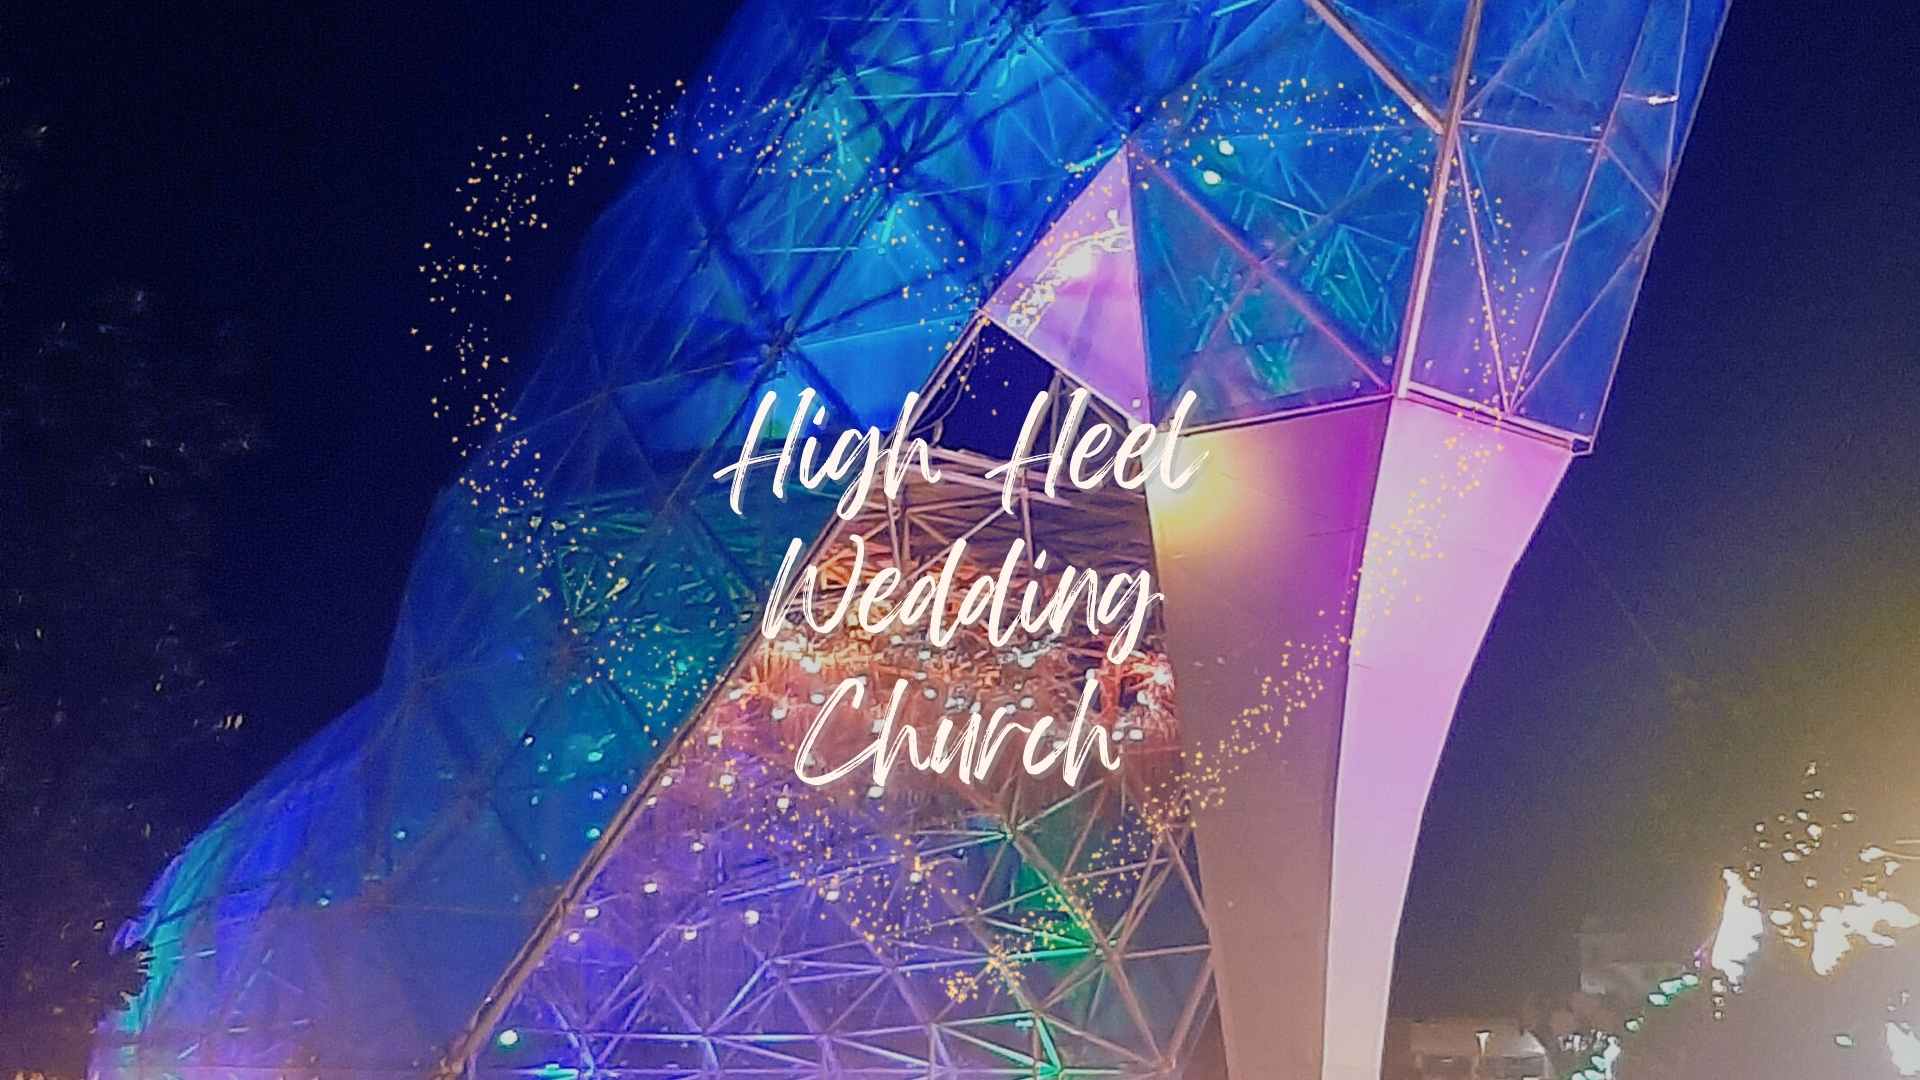 High Heel Wedding Church caption over blue glass building